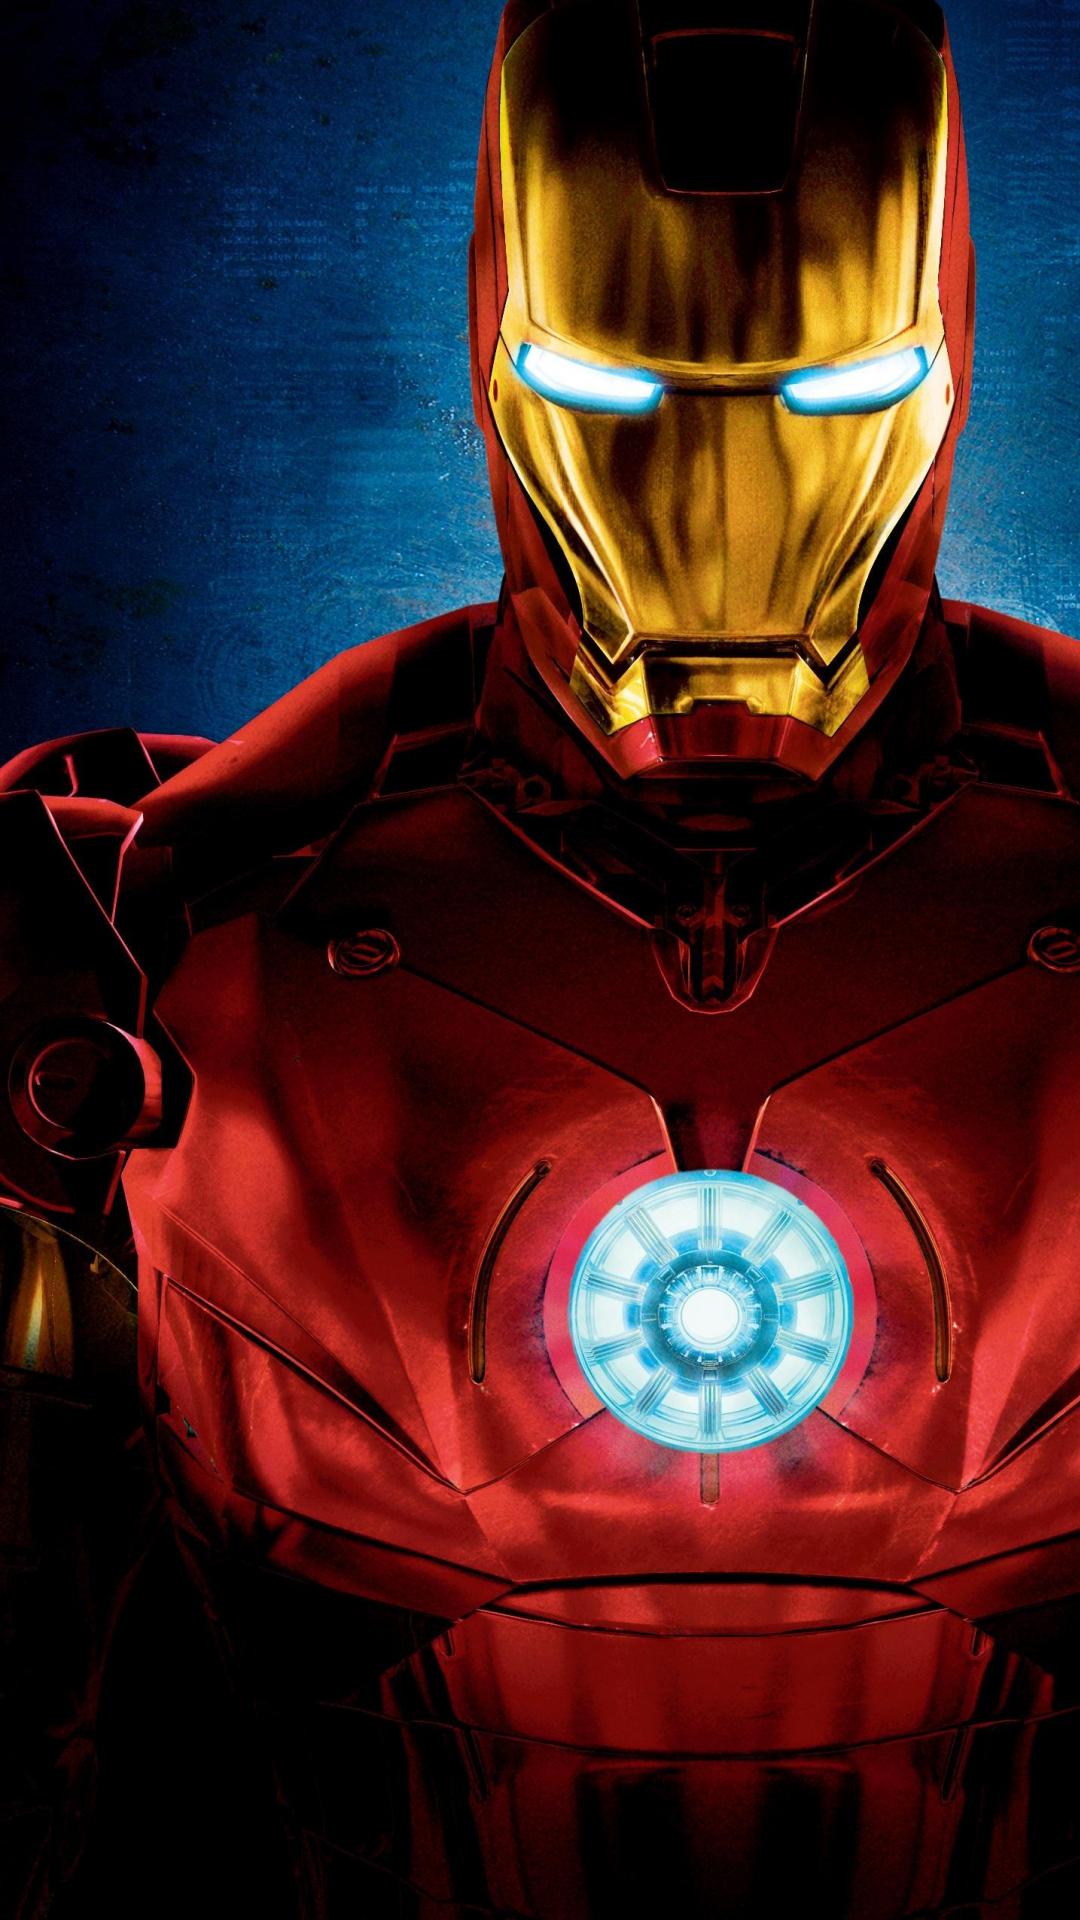 Iron man armor artwork marvel comics wallpaper | (20517)